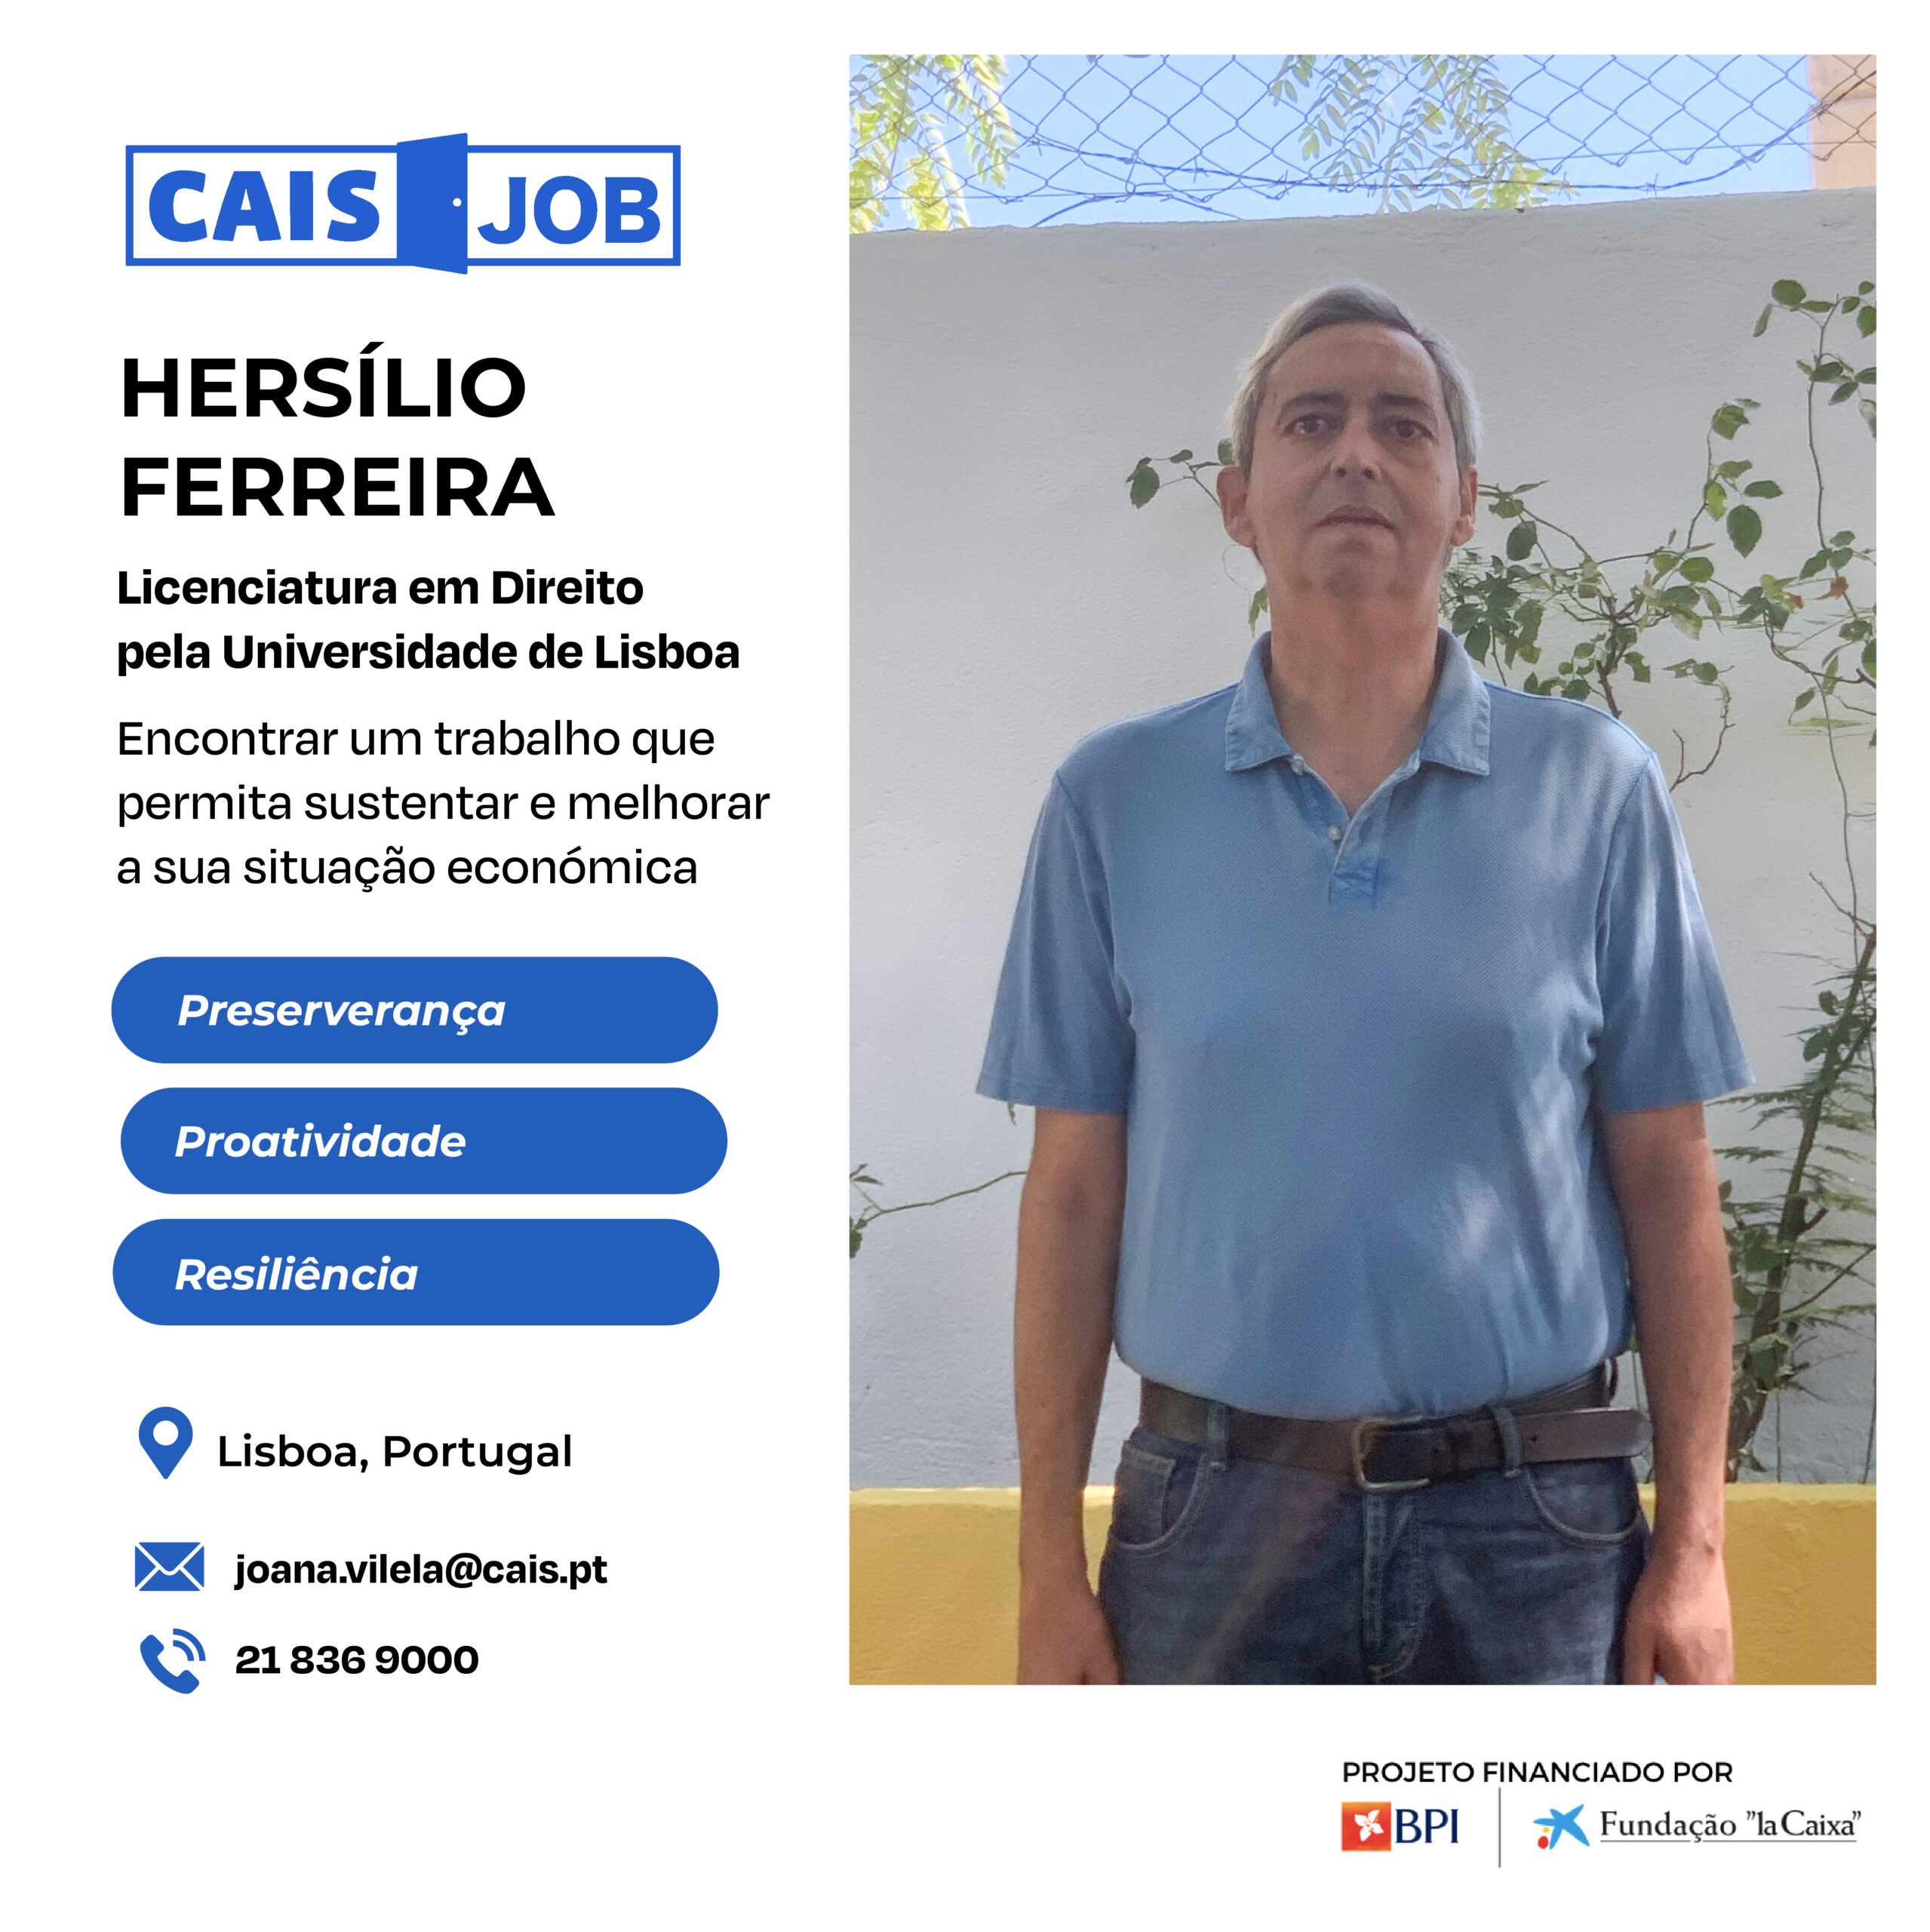 hersilio_caisjob2